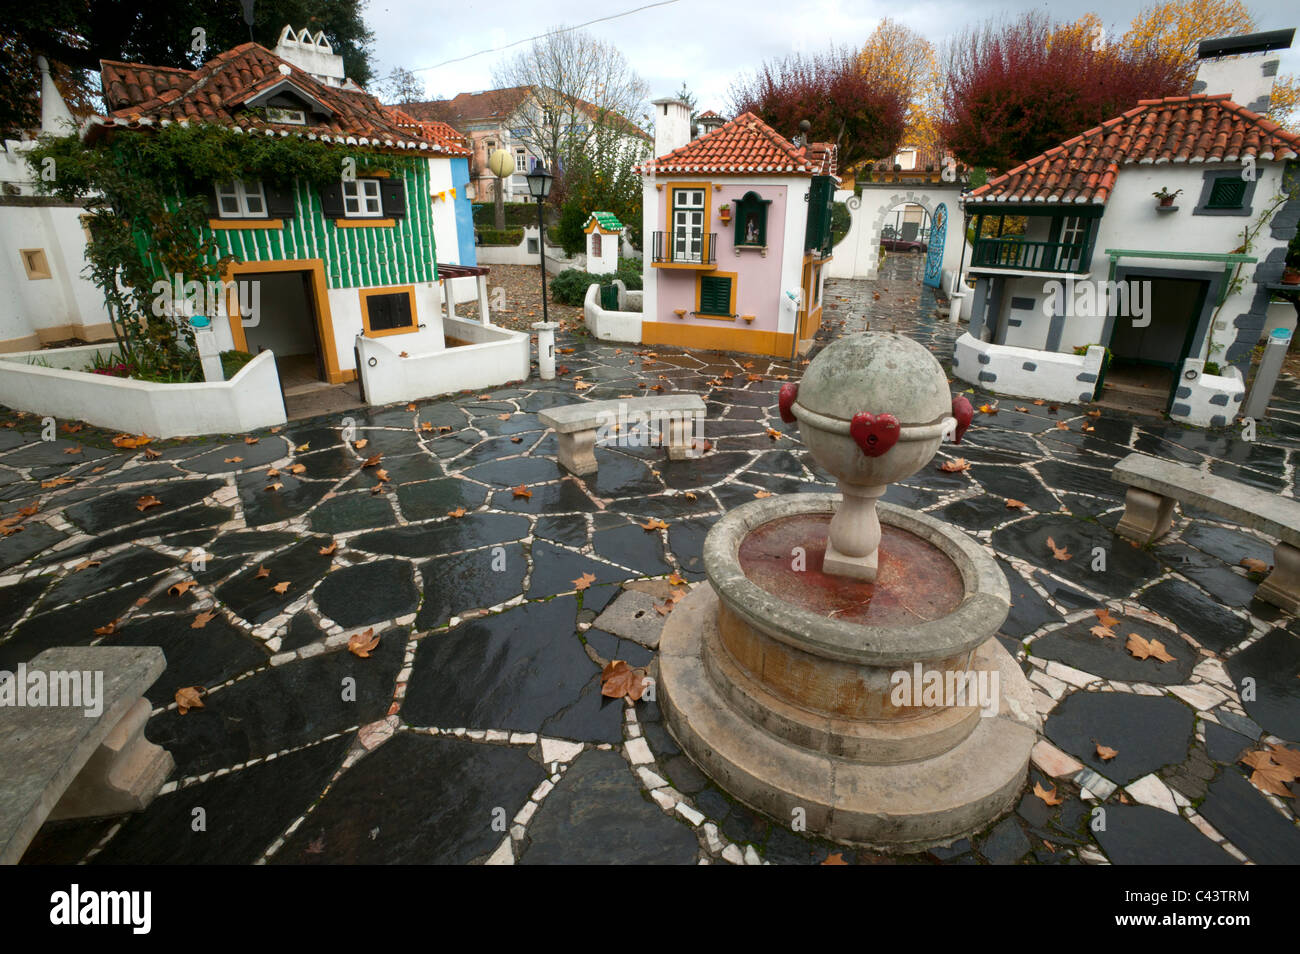 Miniatur-Häuser in Portugal Dos Pequenitos Themenpark in Coimbra, Portugal  Stockfotografie - Alamy